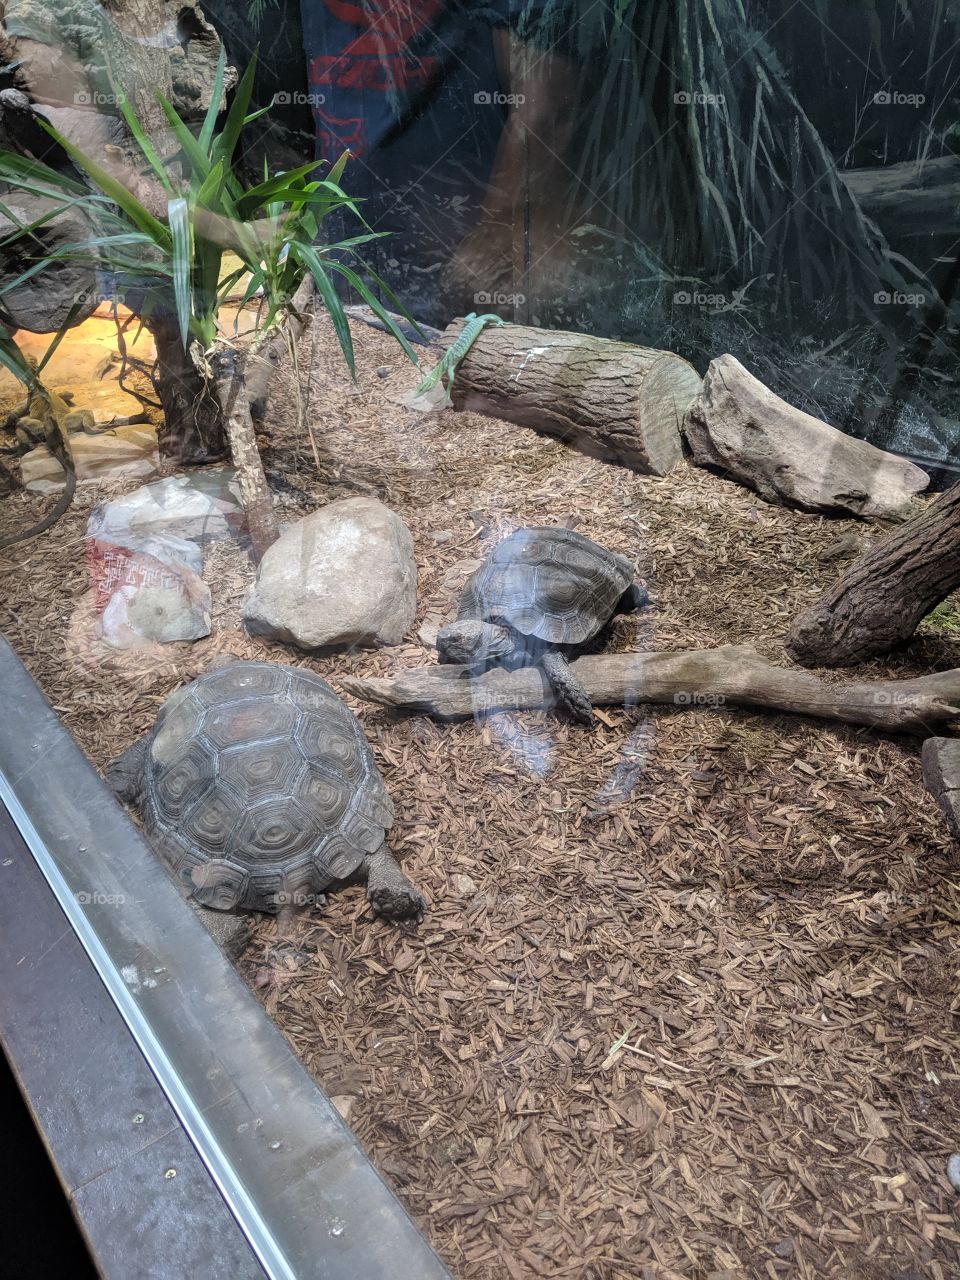 Tortoises and Tree Monitor Lizards.